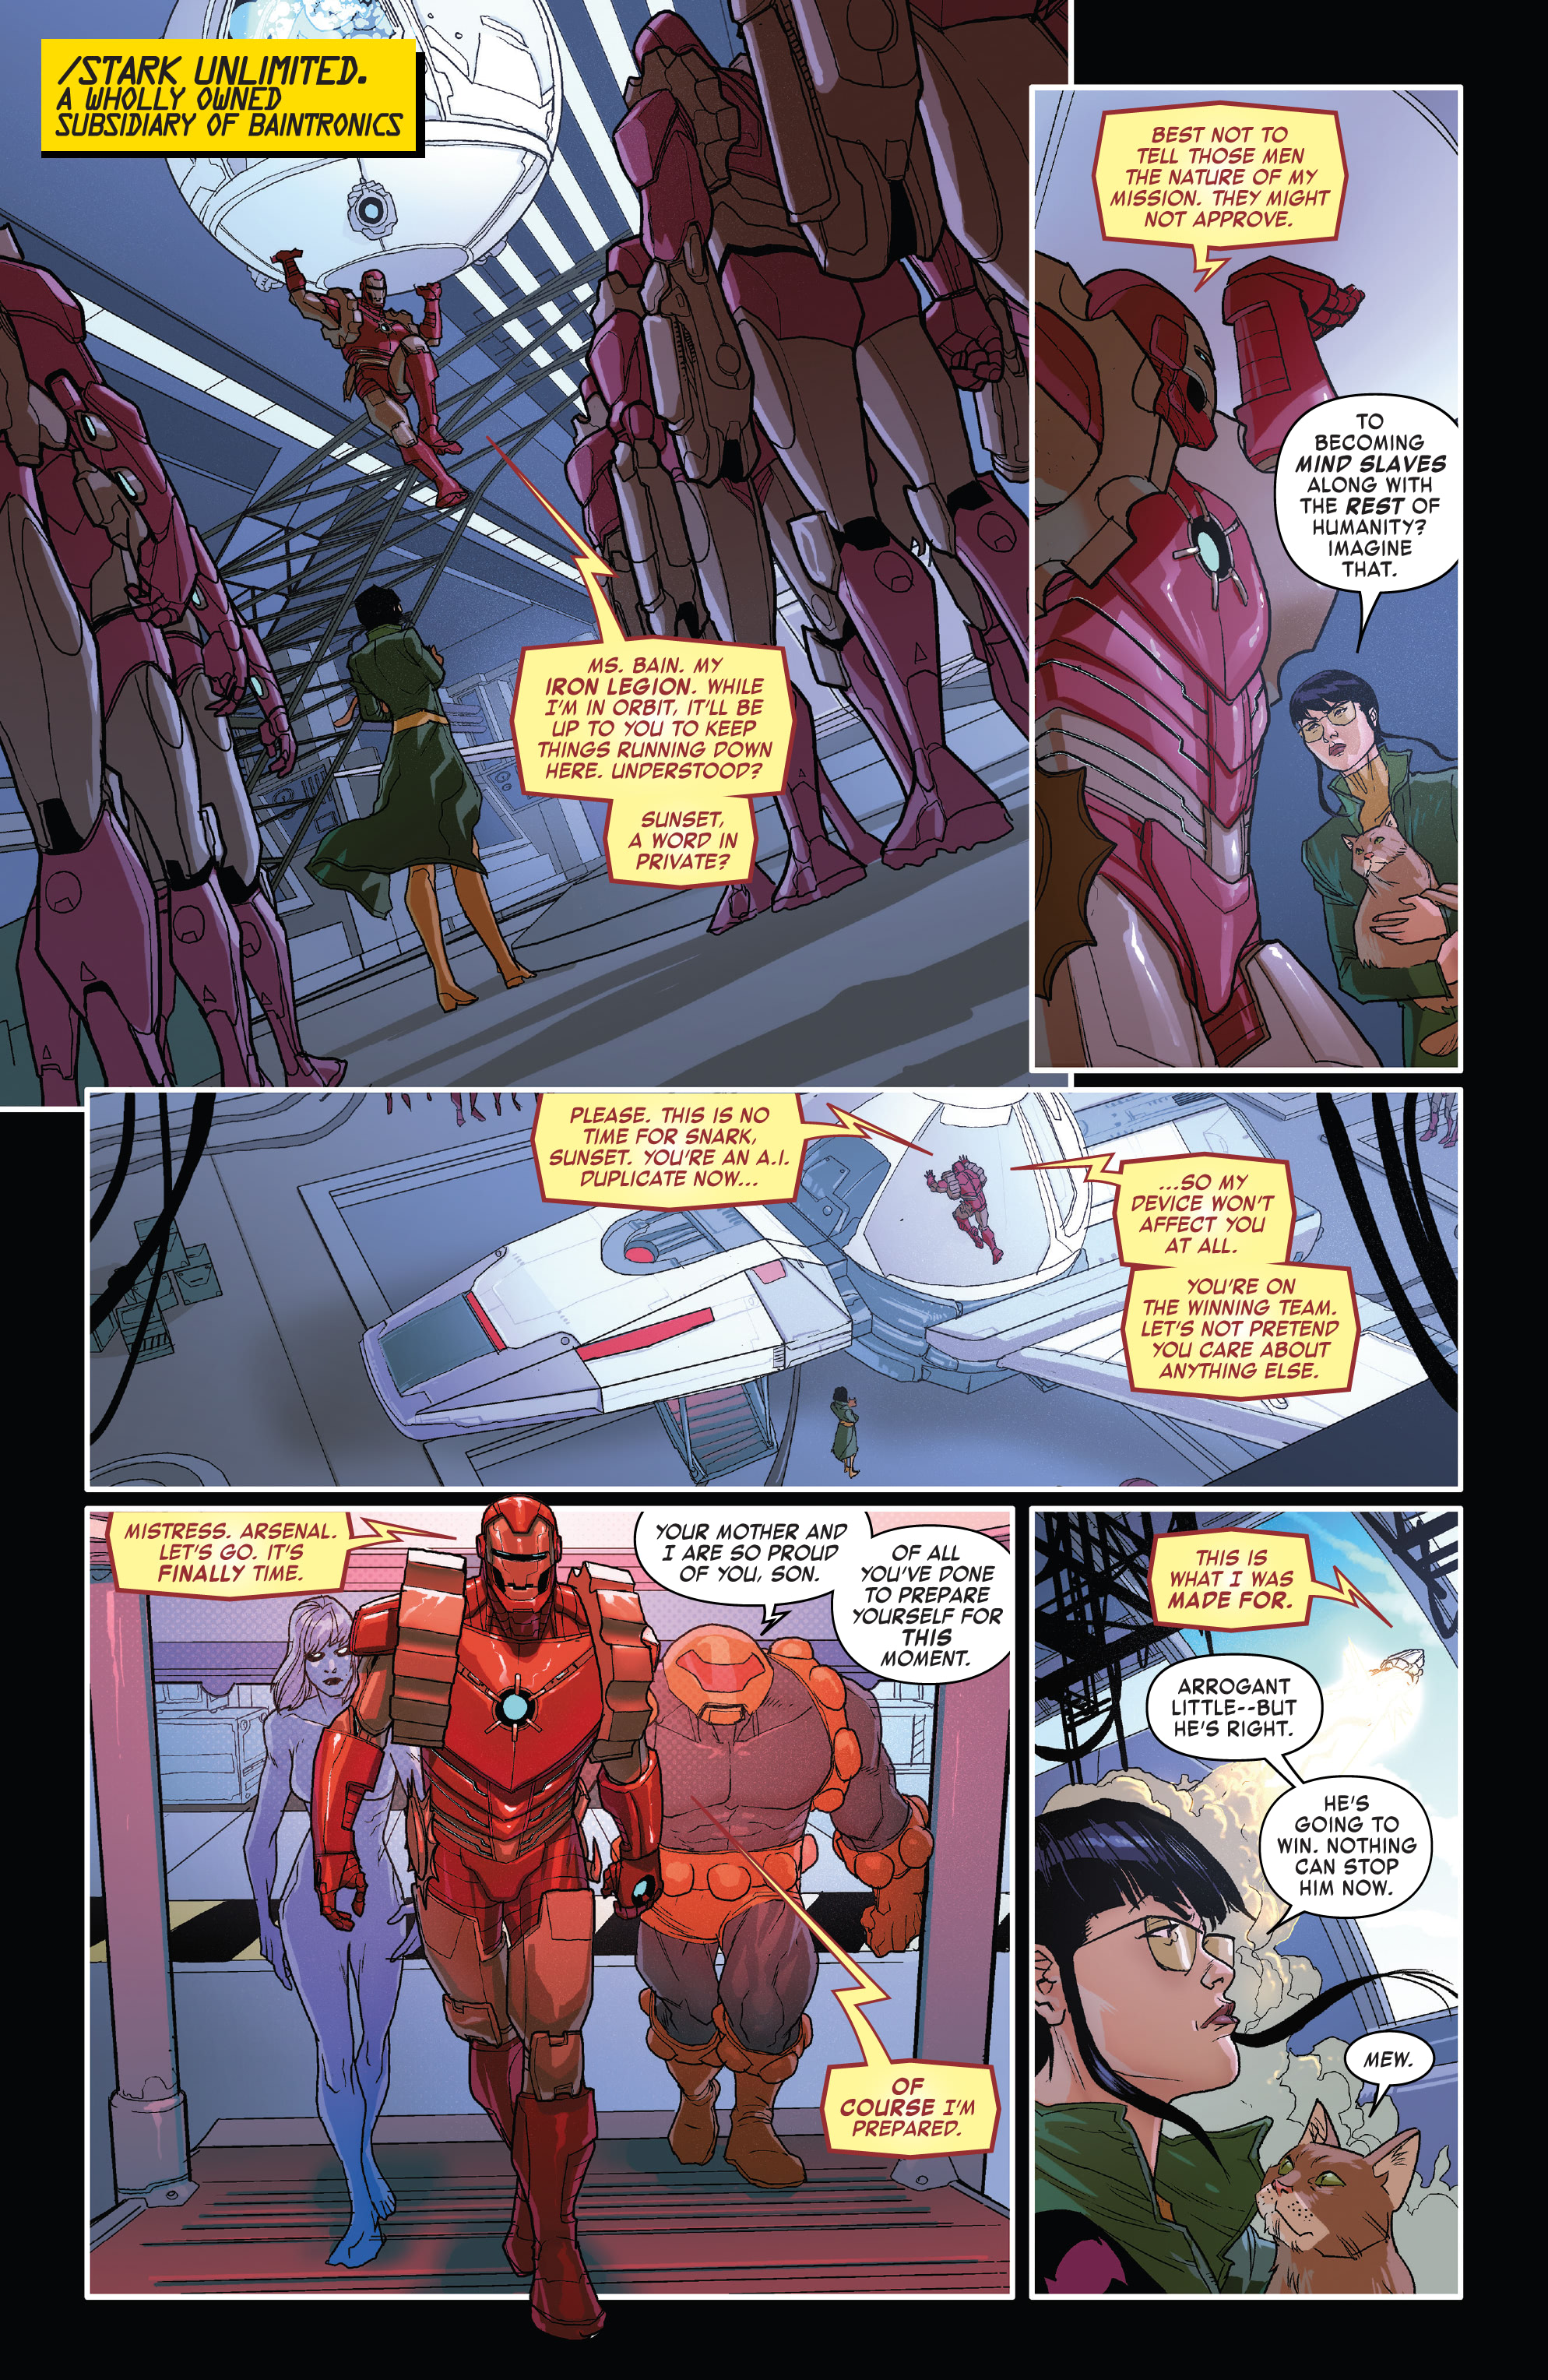 Iron Man 2020 (2020-): Chapter 5 - Page 5